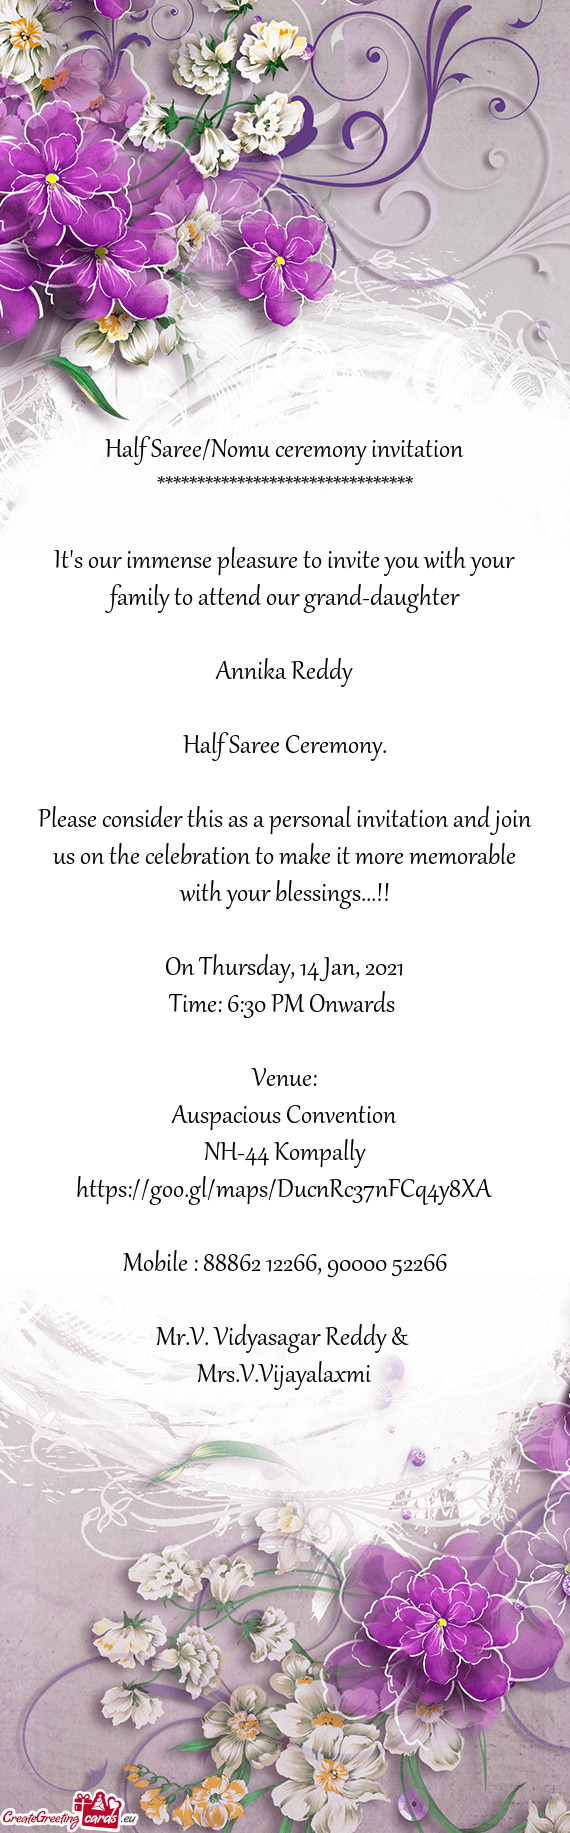 Half Saree/Nomu ceremony invitation